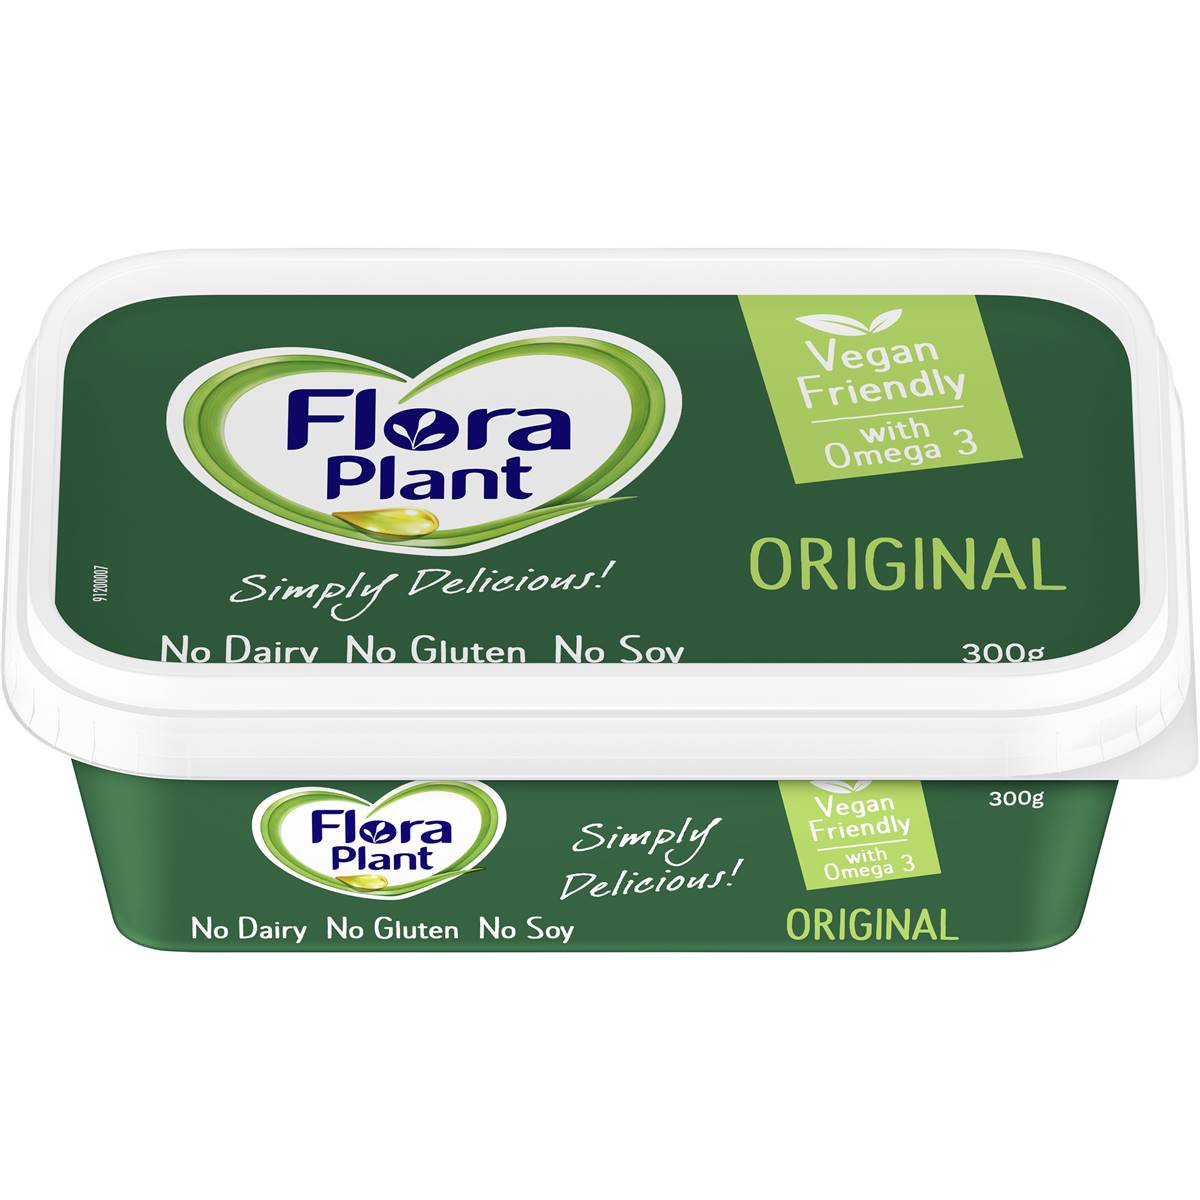 Calories in Flora Plant Dairy Free Original